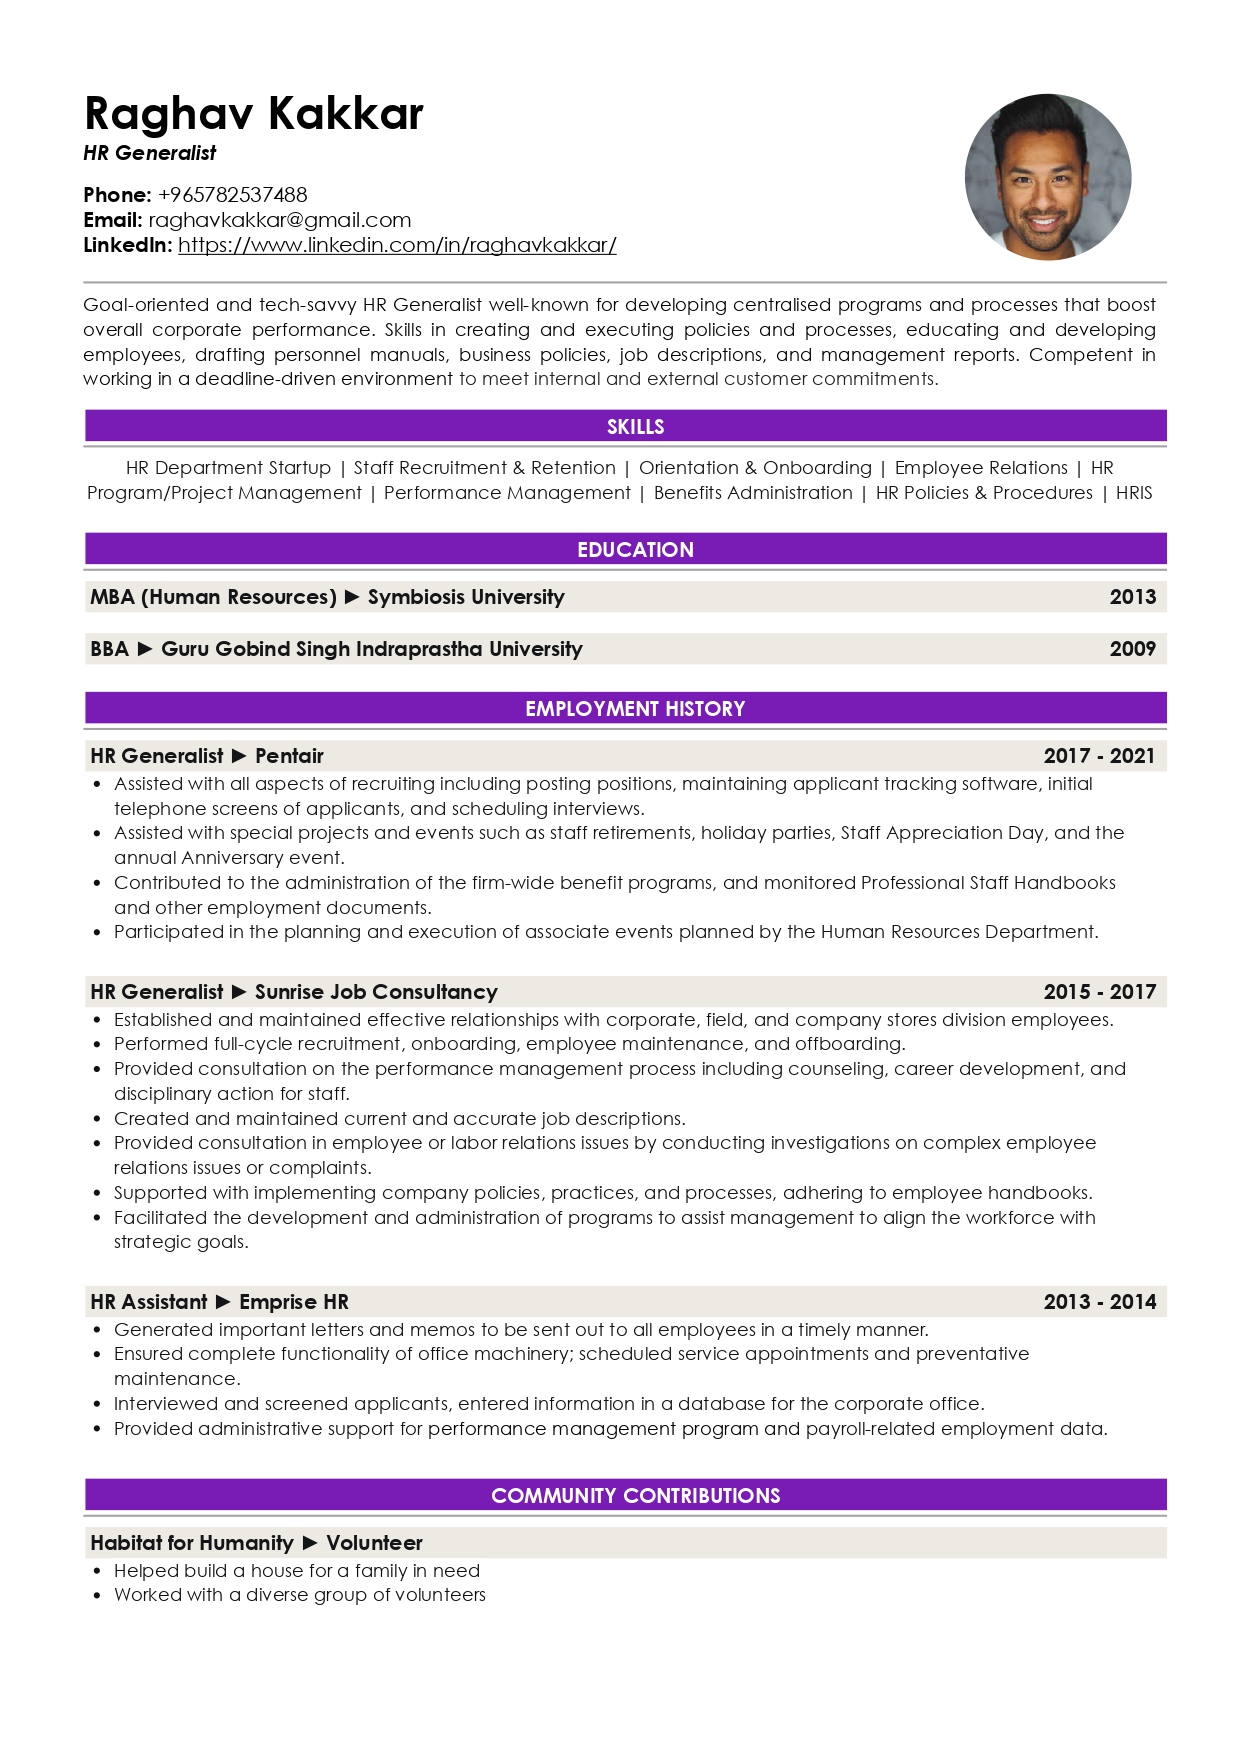 Sample Resume of HR Generalist | Free Resume Templates & Samples on Resumod.co